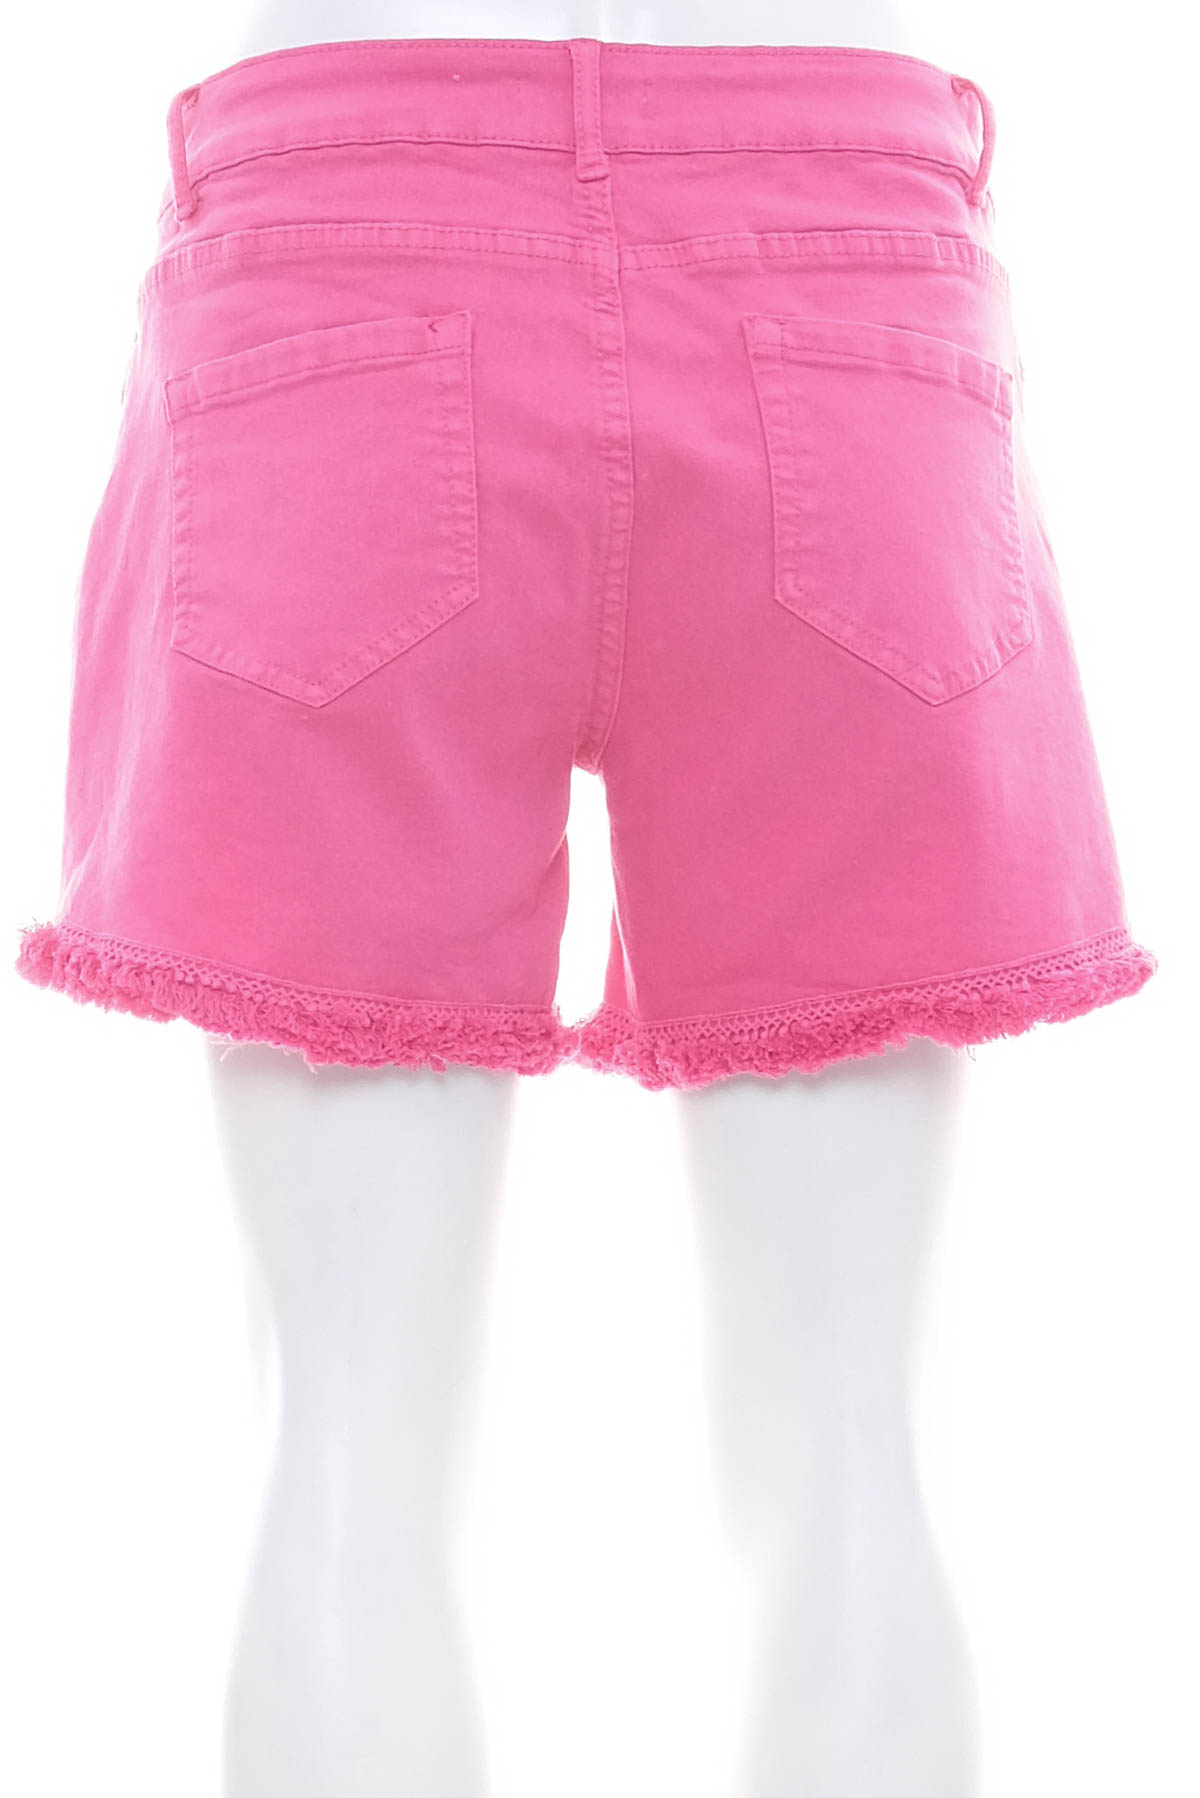 Female shorts - Bel&Bo - 1